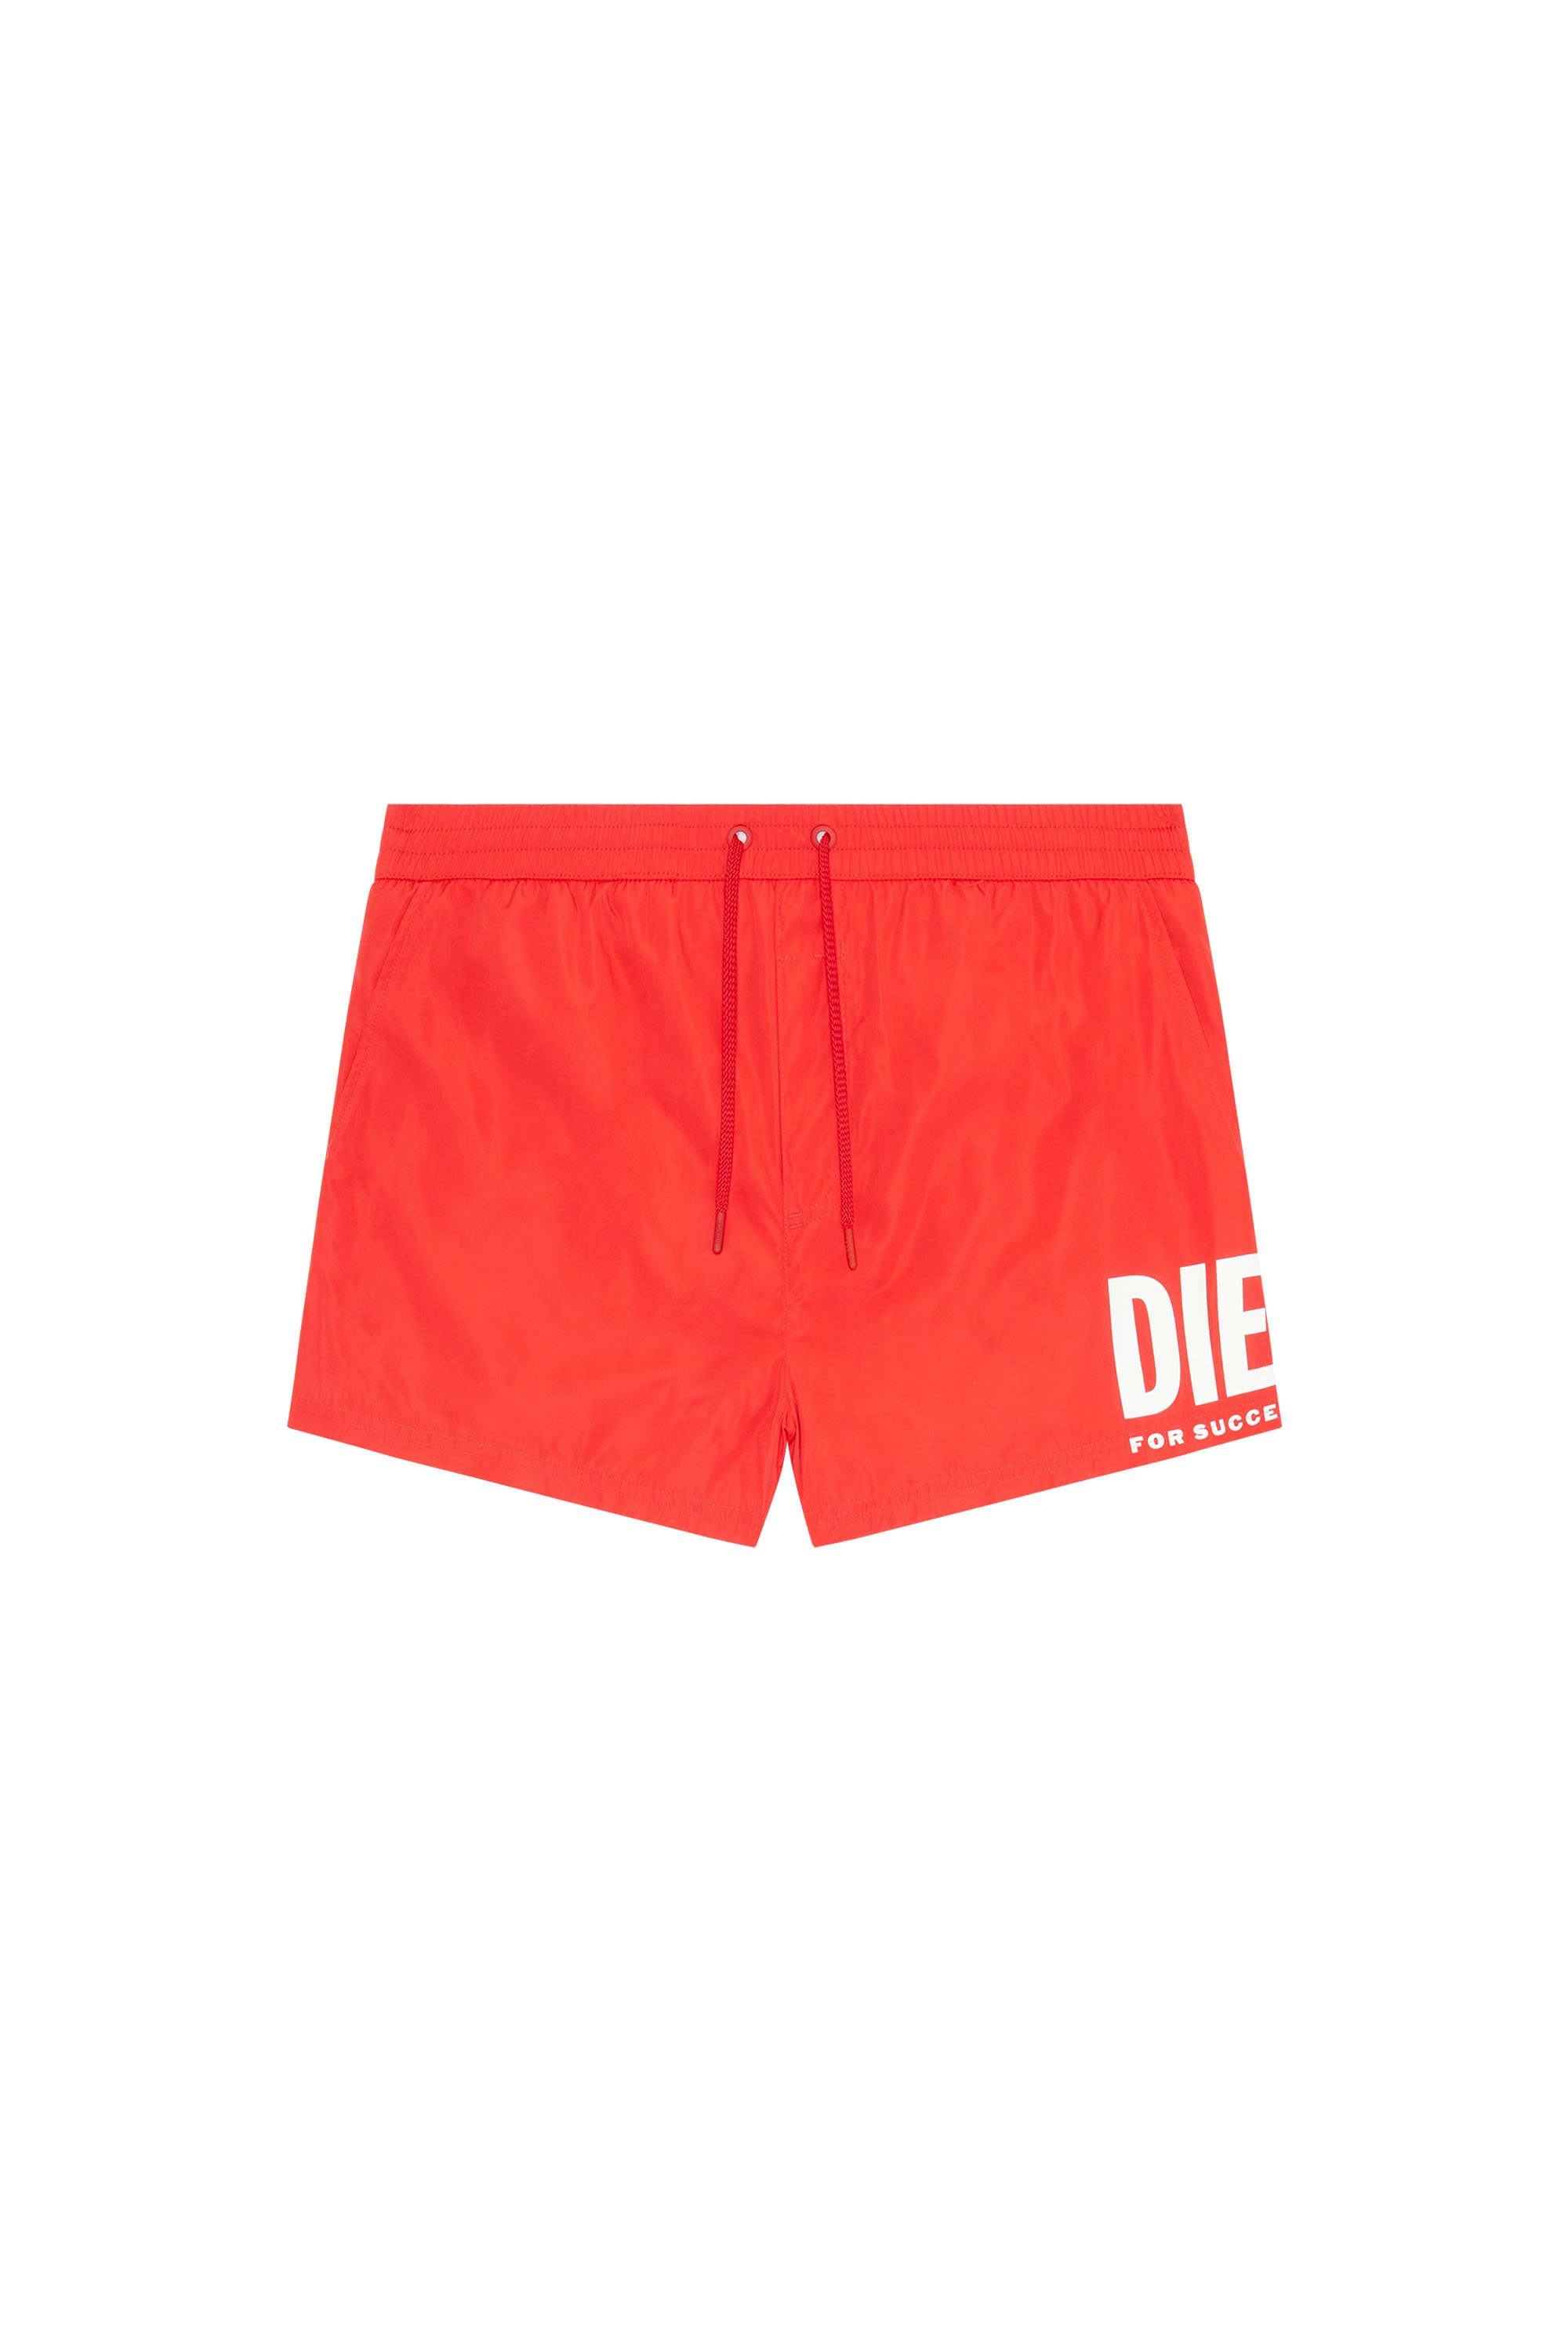 Diesel - Bade-Shorts mit großem Logo-Print - Badeshorts - Herren - Rot